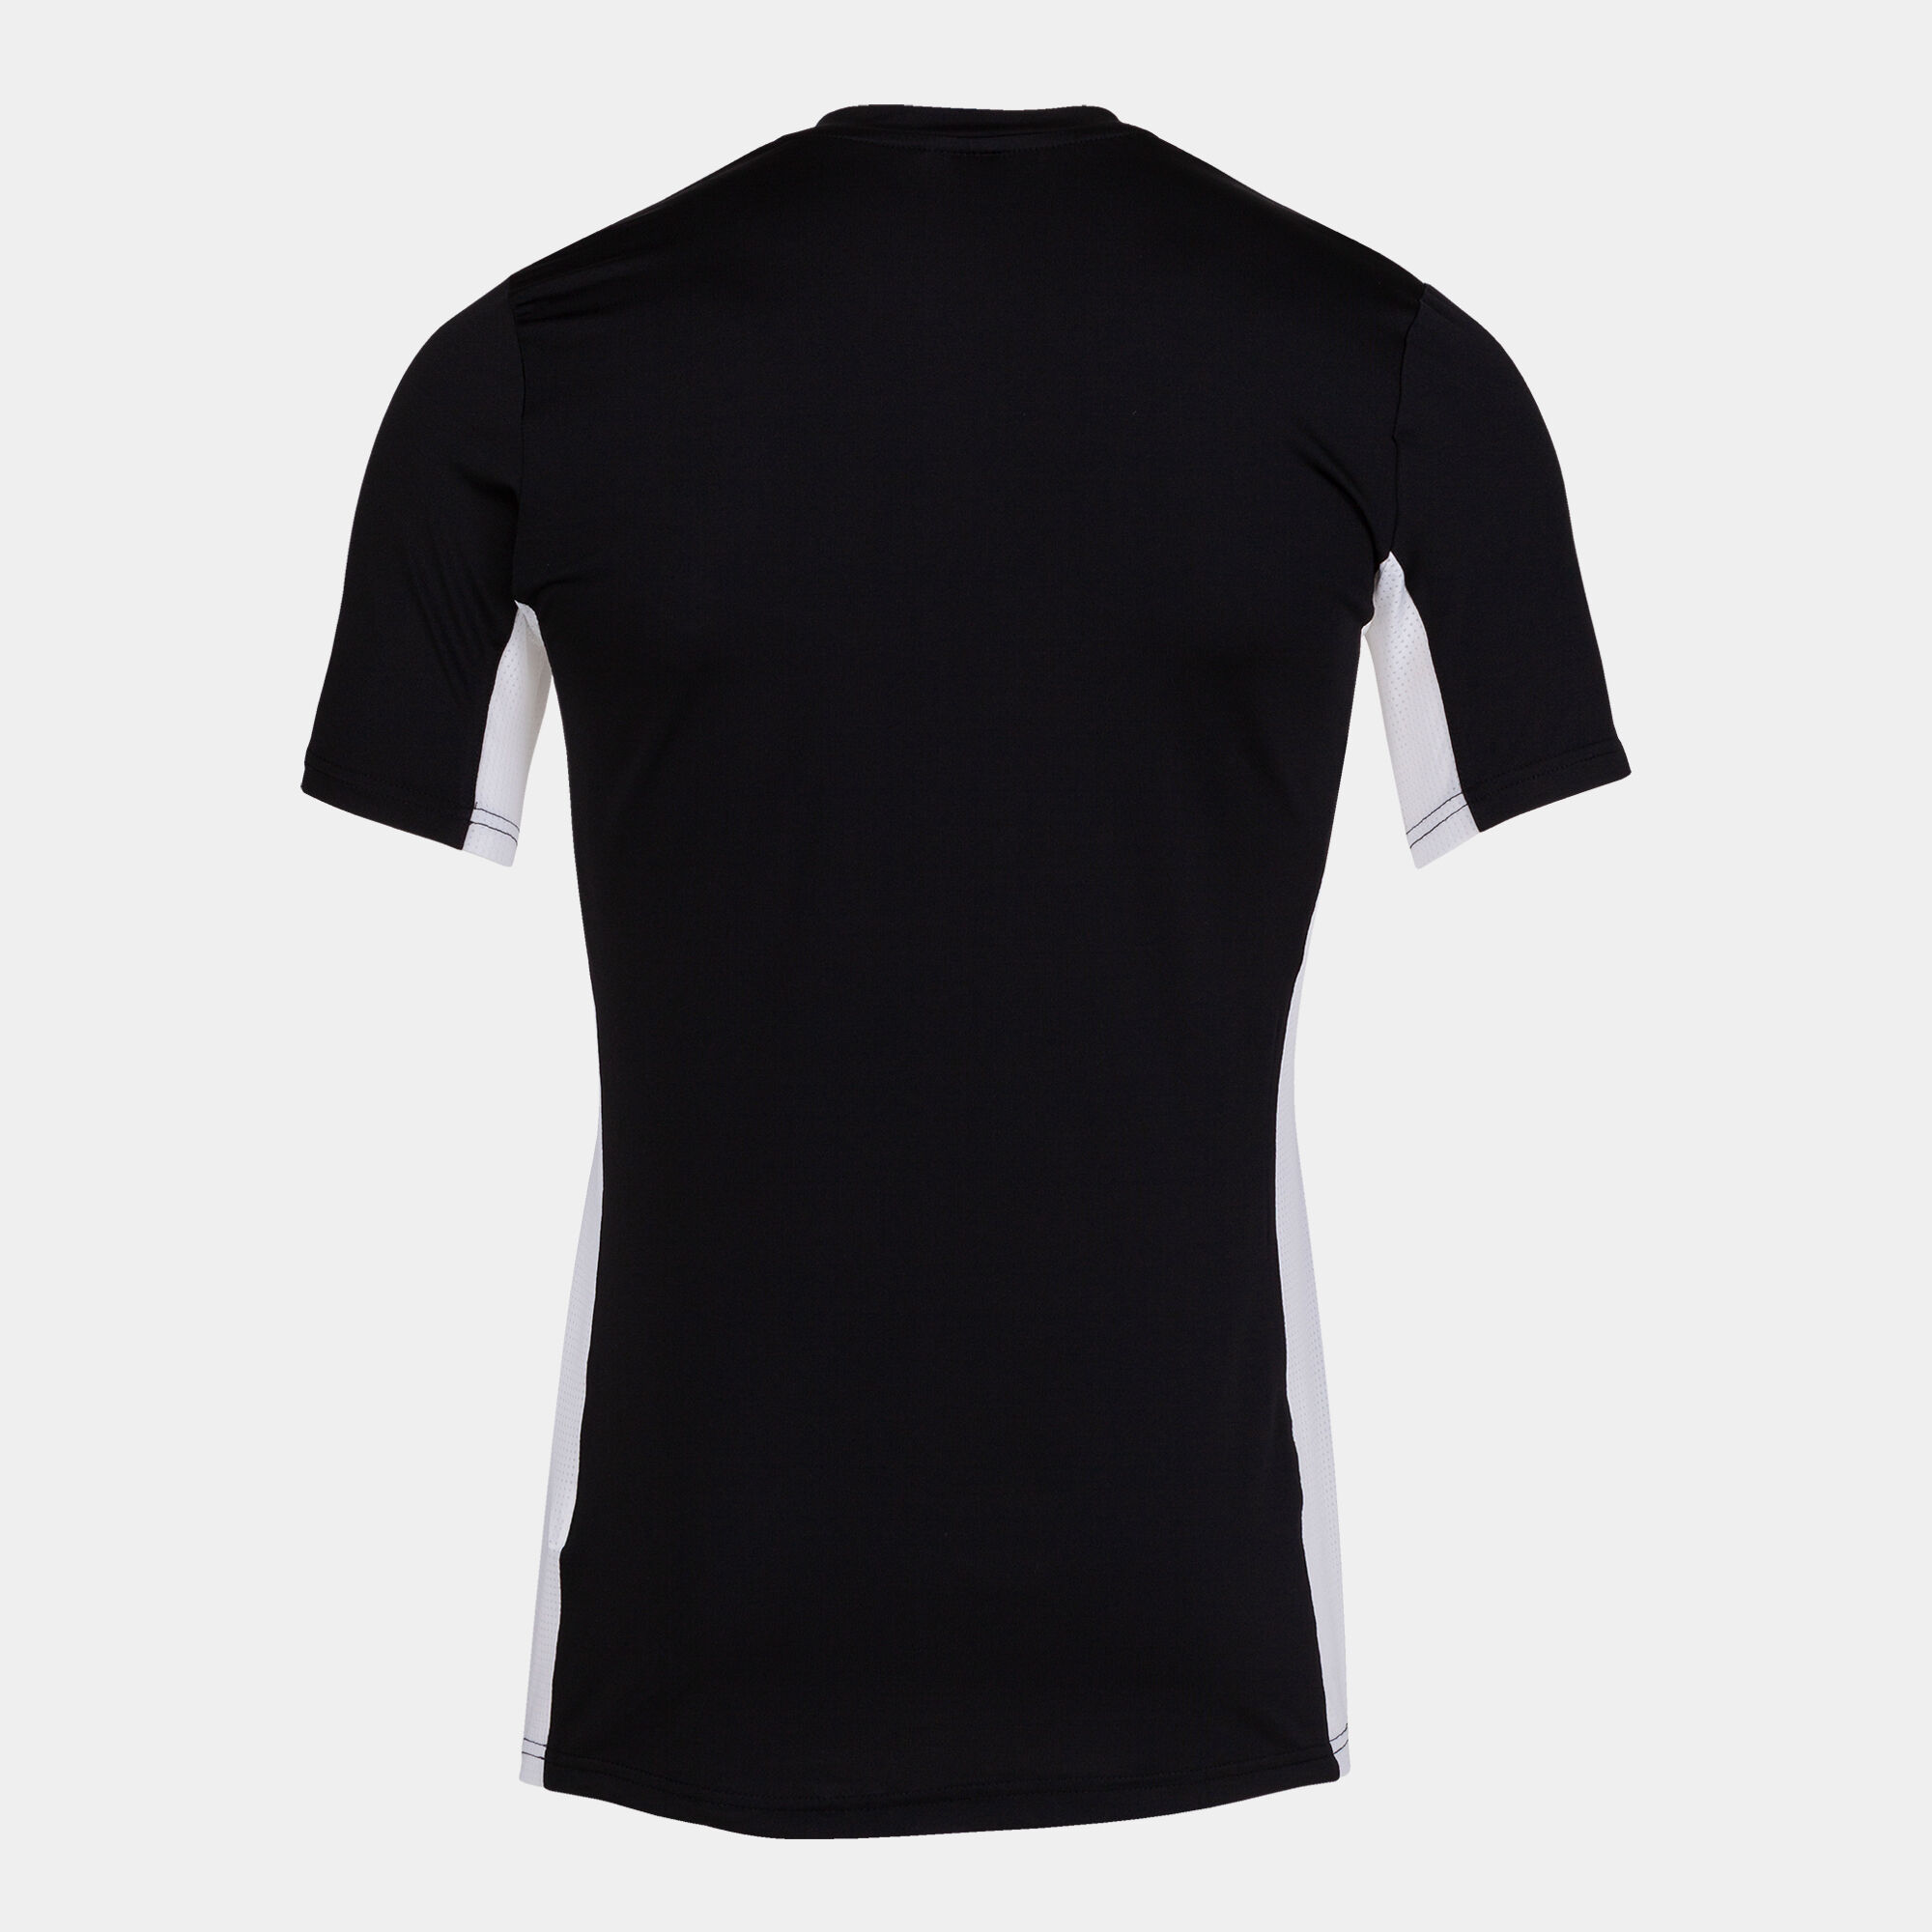 Camiseta manga corta hombre Superliga negro blanco